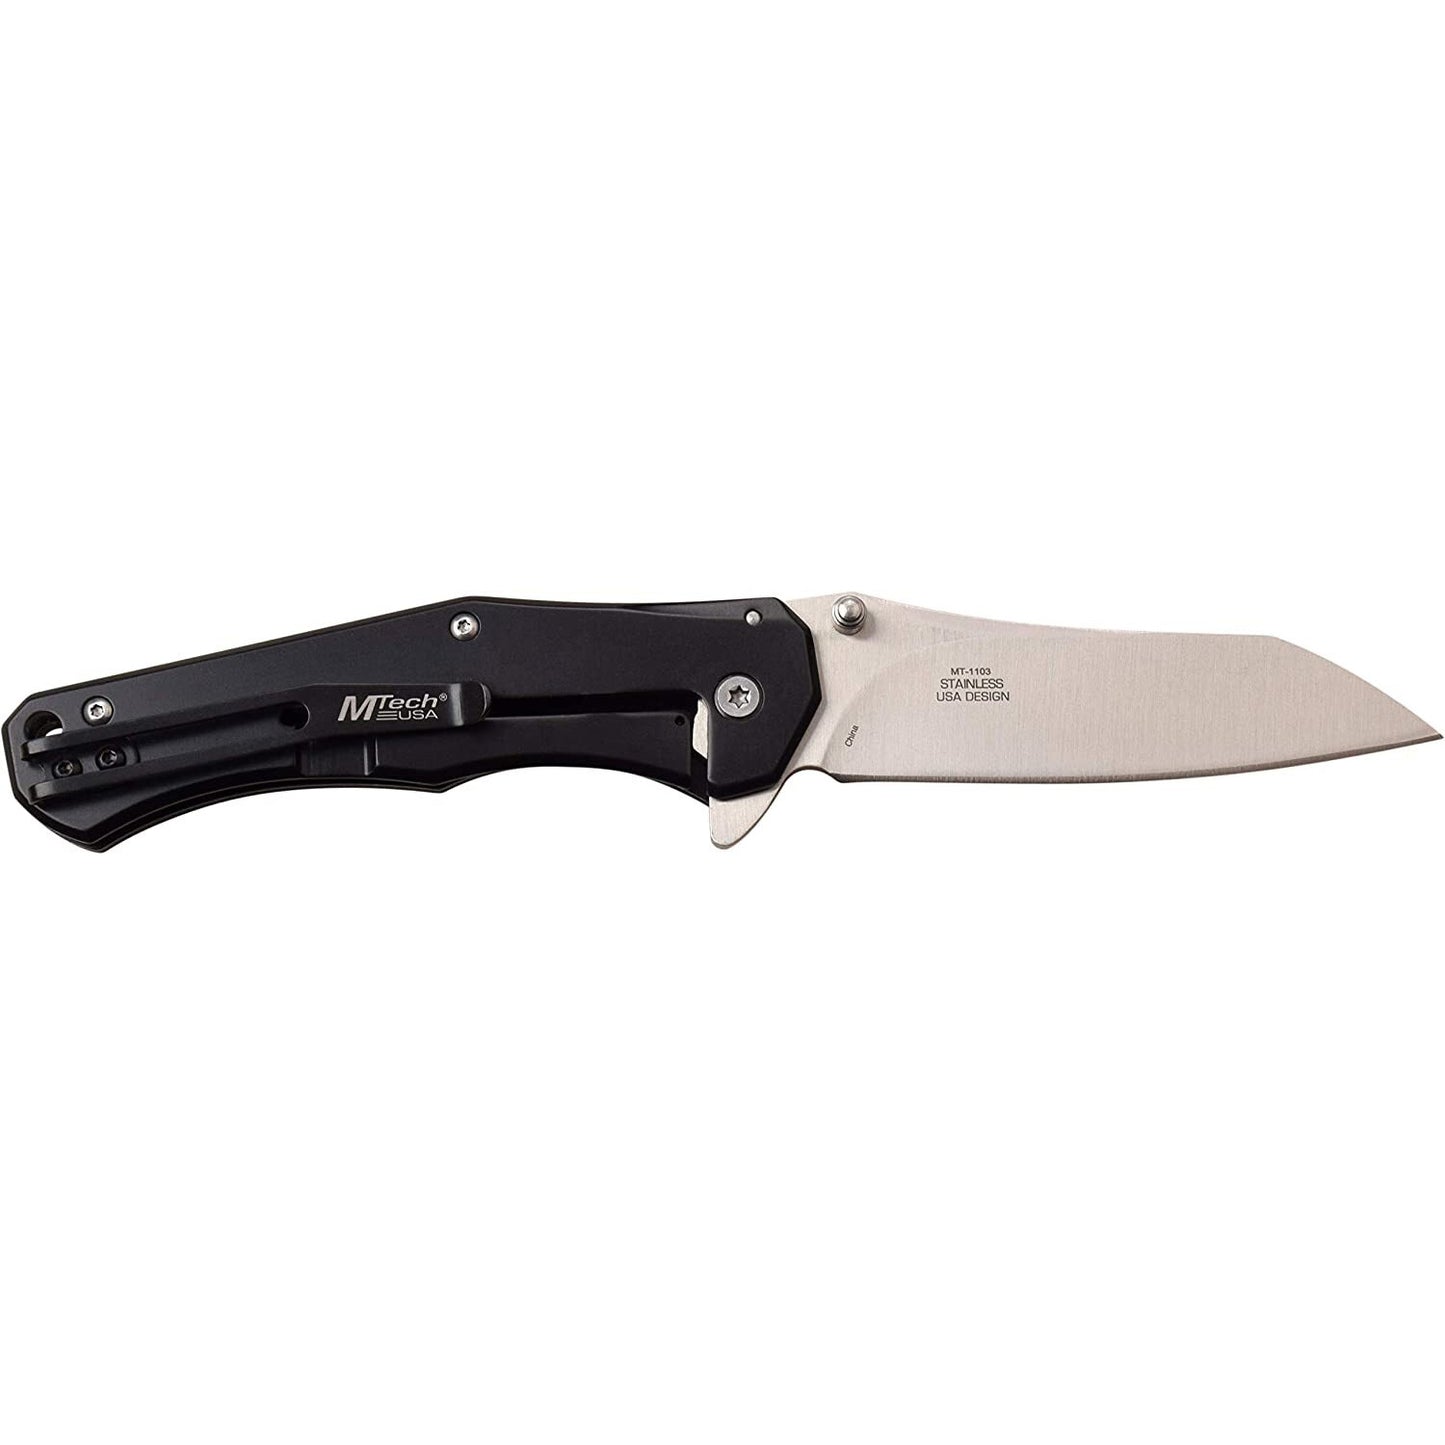 Mtech Mtech Sheepsfoot Fine Edge Blade Folding Pocket Knife - 4.5 Inches G10 Handle #mt-1103Gy Black